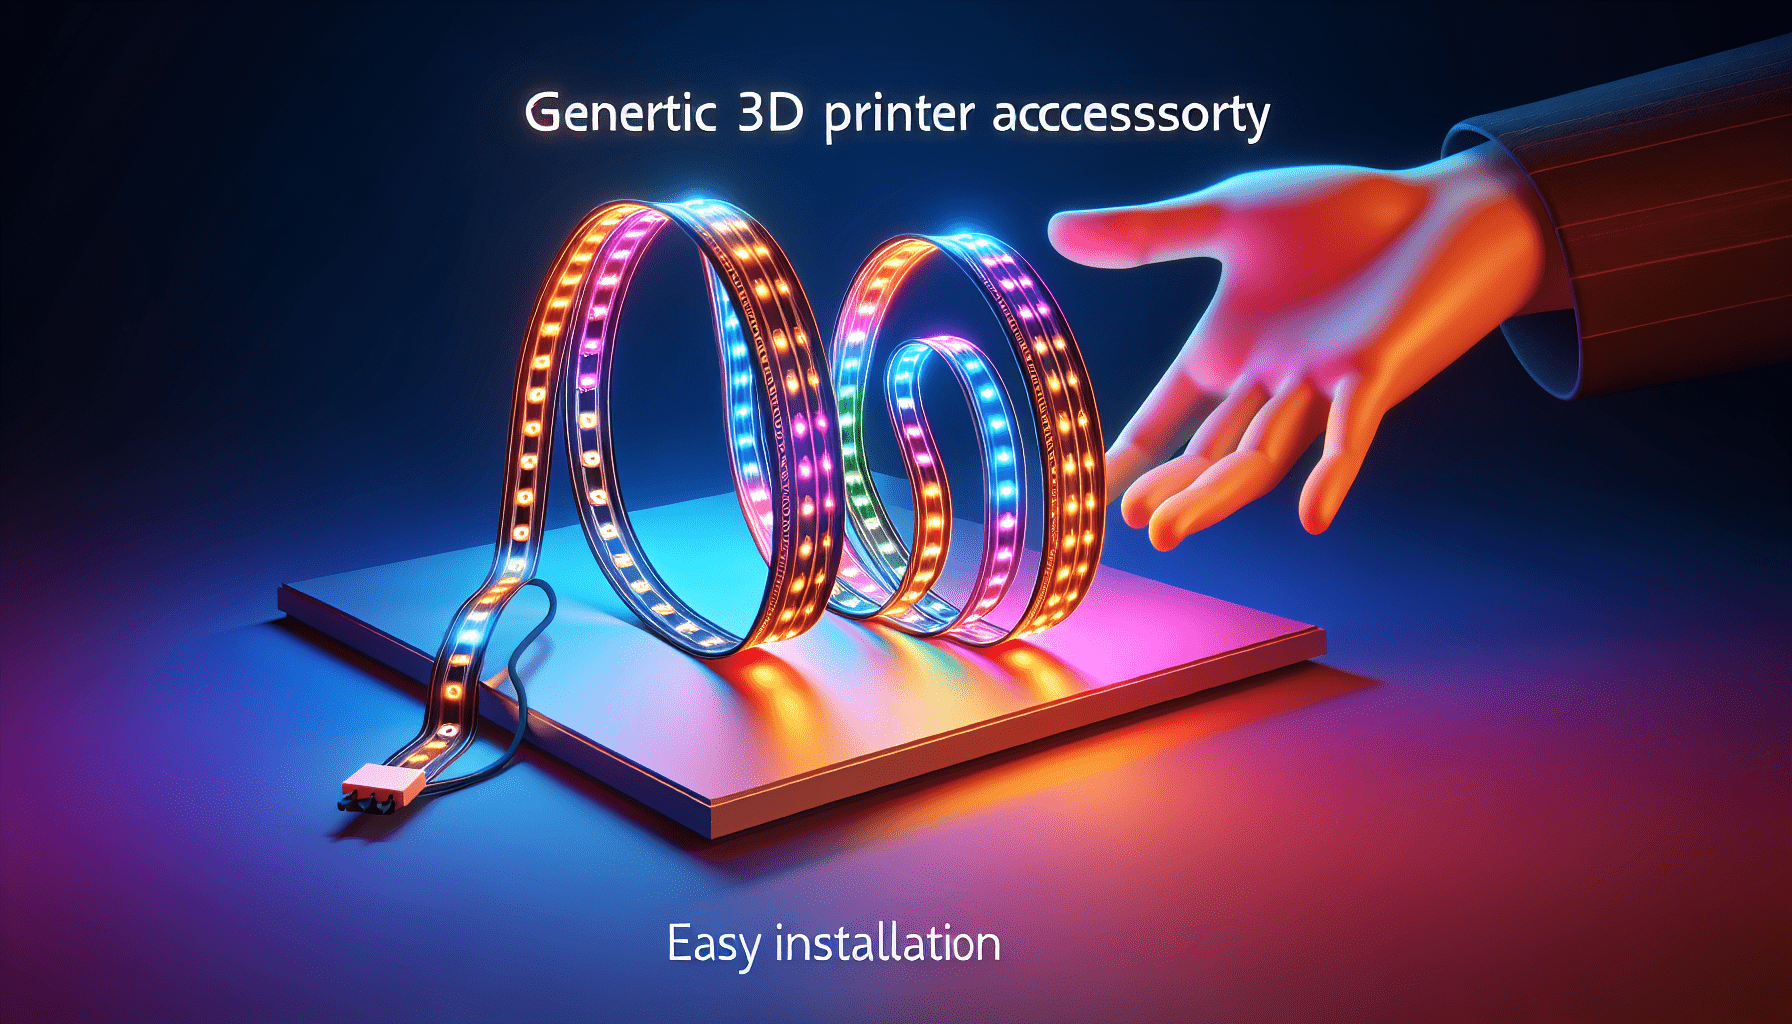 Ickiya 3D Printer Accessories Led Lighting Strip Review